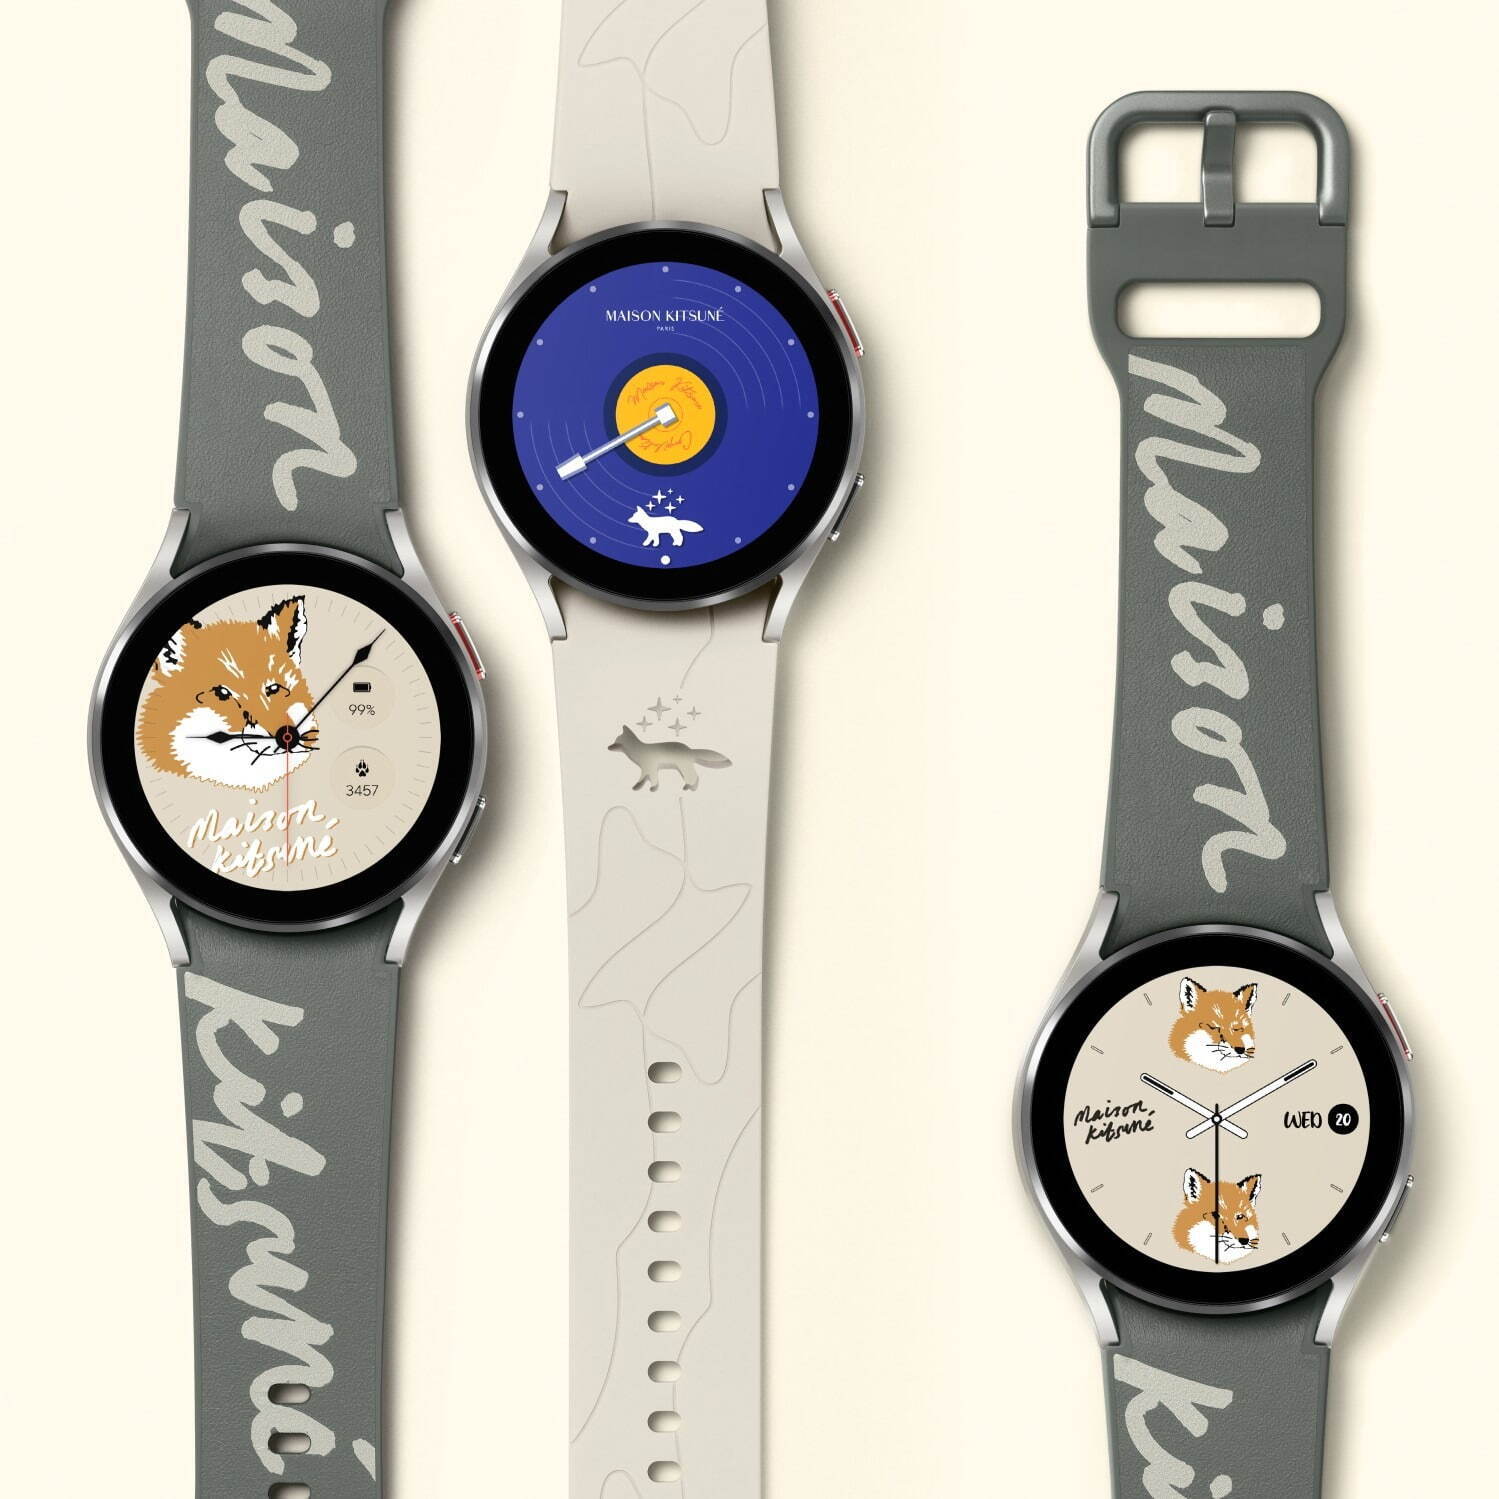 Galaxy Watch4 Maison Kitsuné Edition
税込価格 48,400円